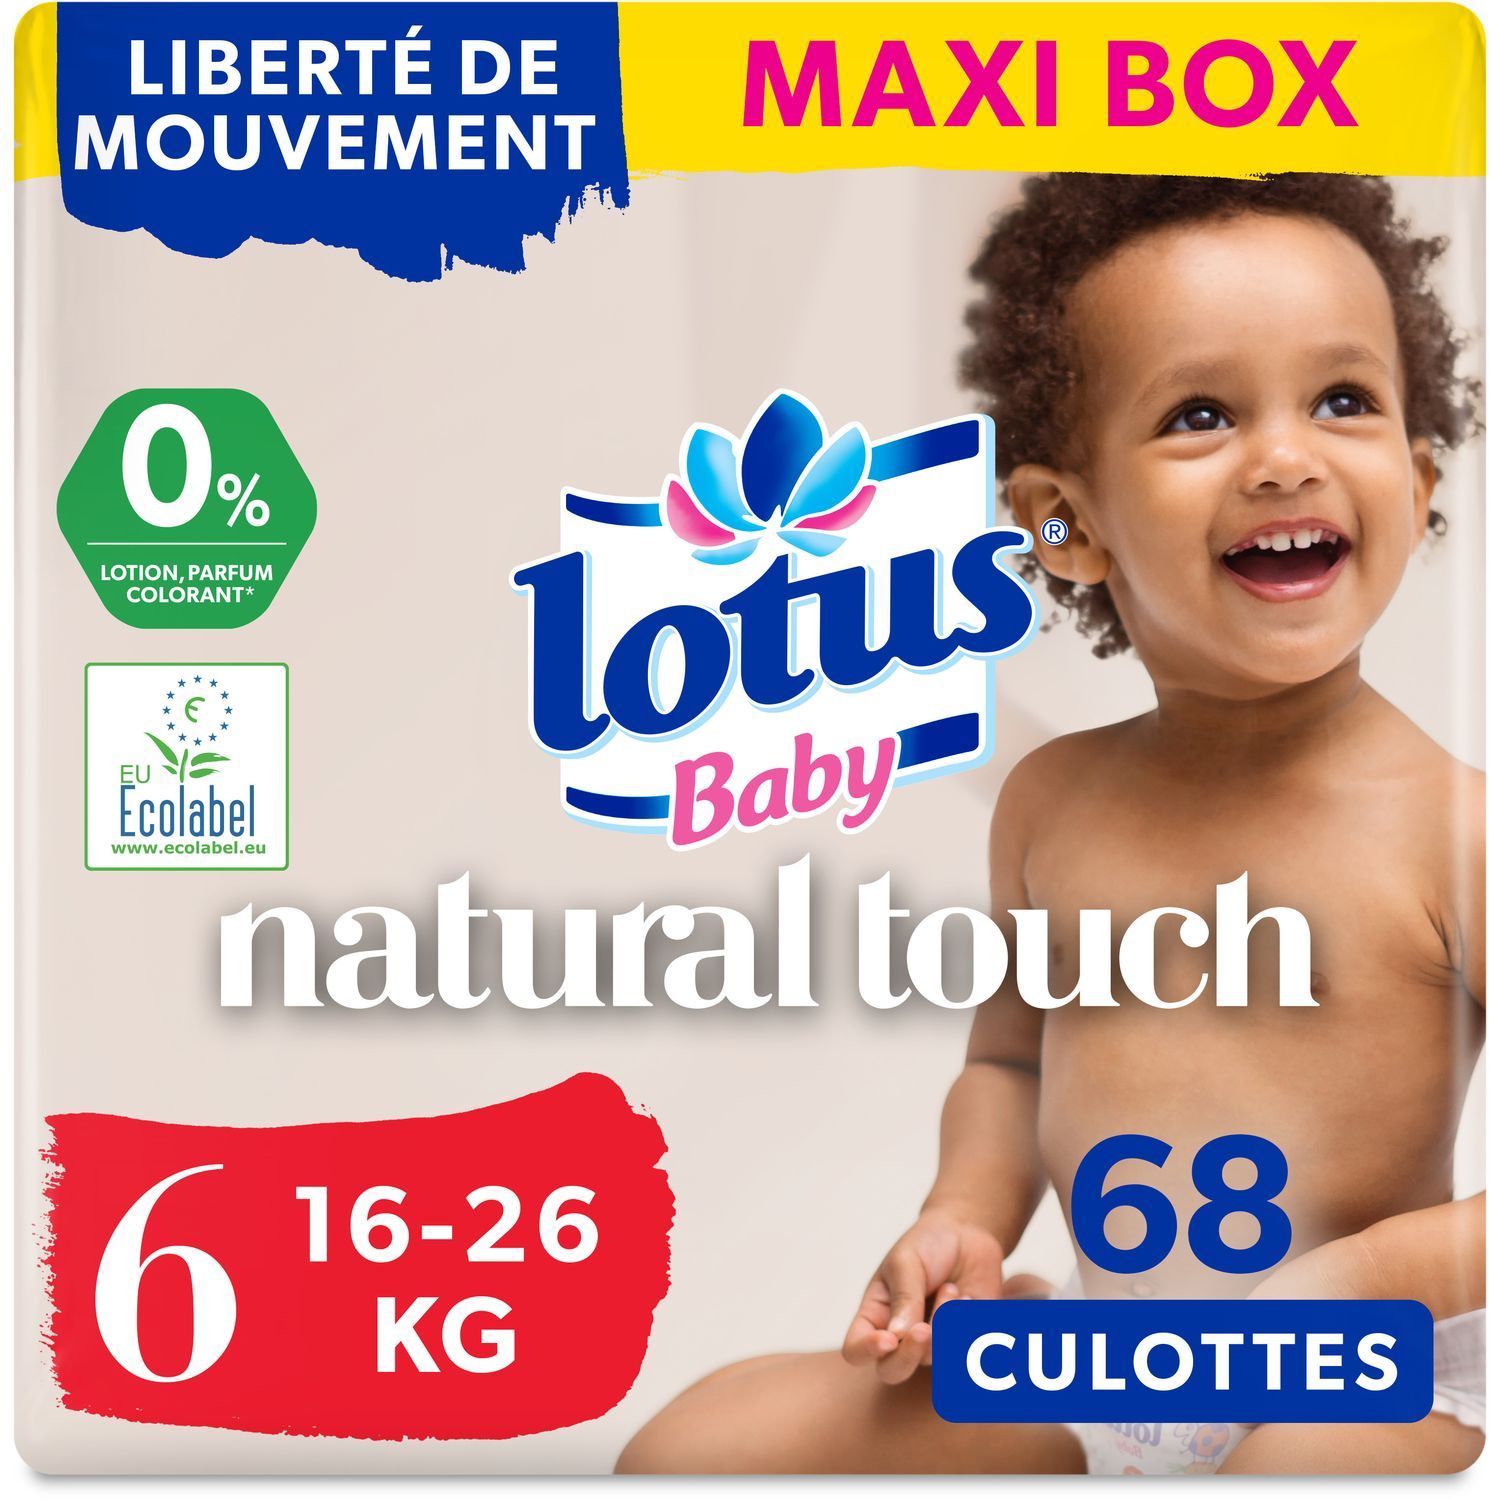 LOT DE 6 - LOTUS BABY : Naturel Touch - Couches taille 1 (2-5 kg